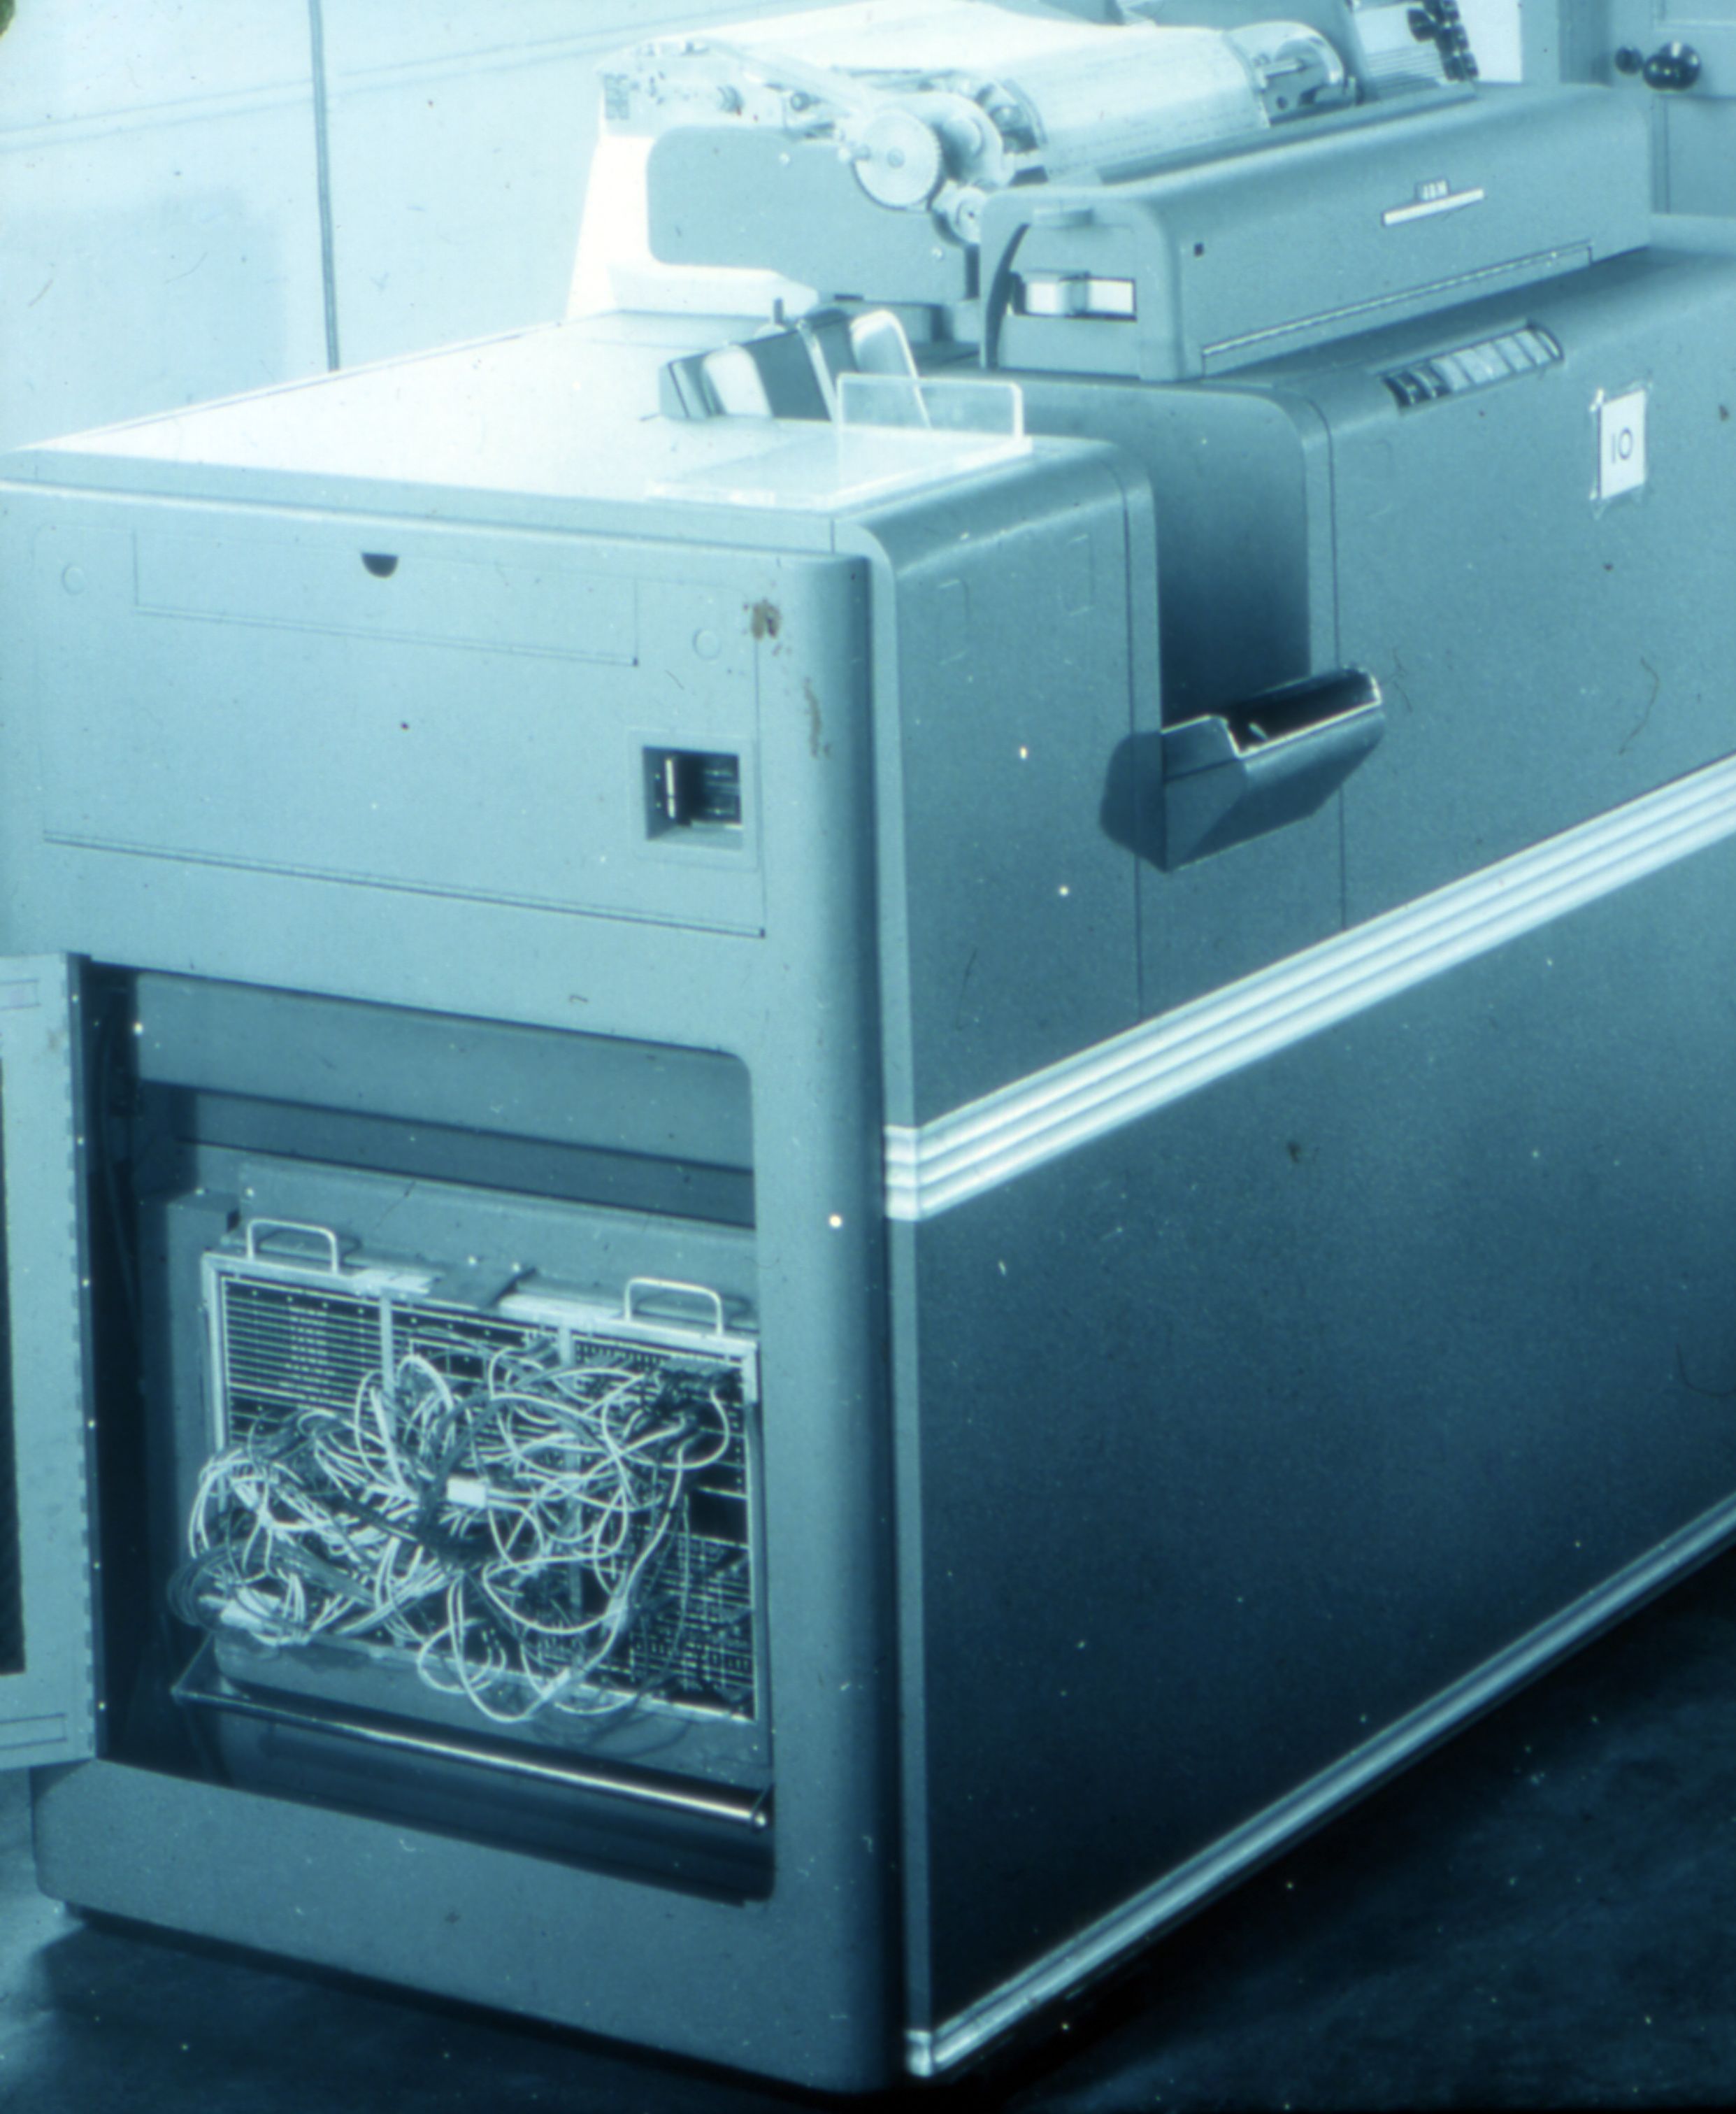 IBM 420 computation machine at Chessington